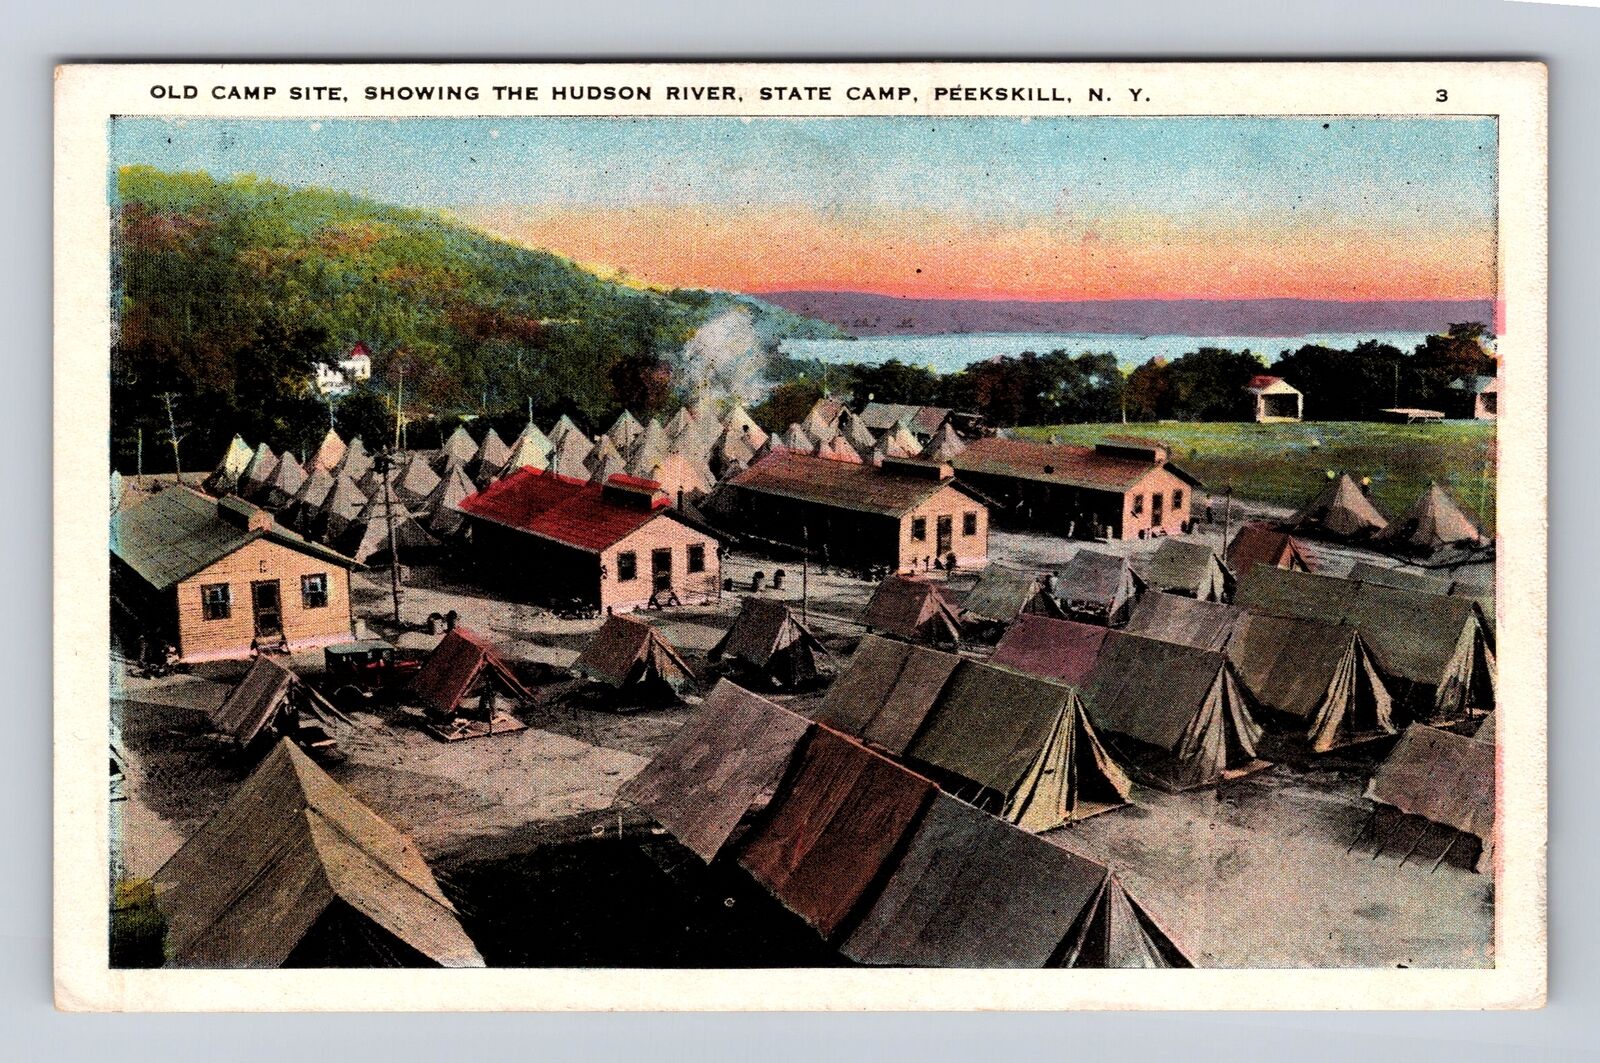 Peekskill NY-New York, State Camp, Old Camp Site, Vintage Souvenir Postcard